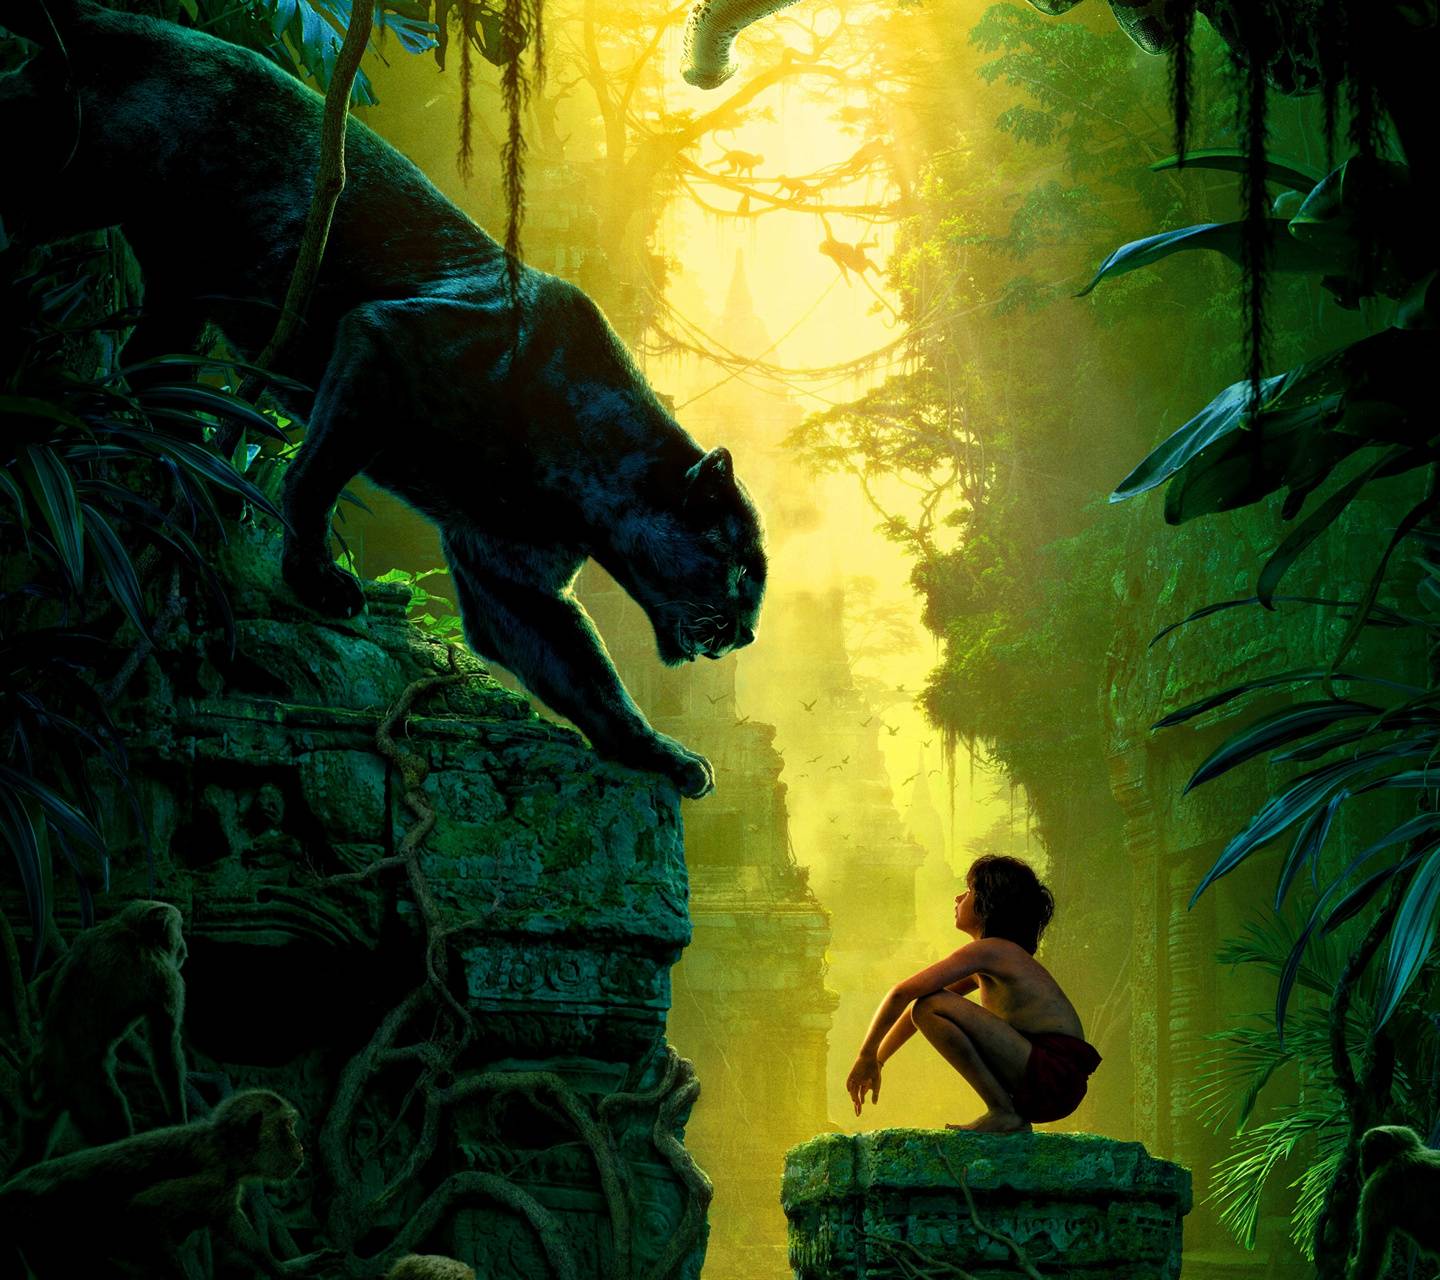 Mowgli Wallpapers - Top Free Mowgli Backgrounds - WallpaperAccess